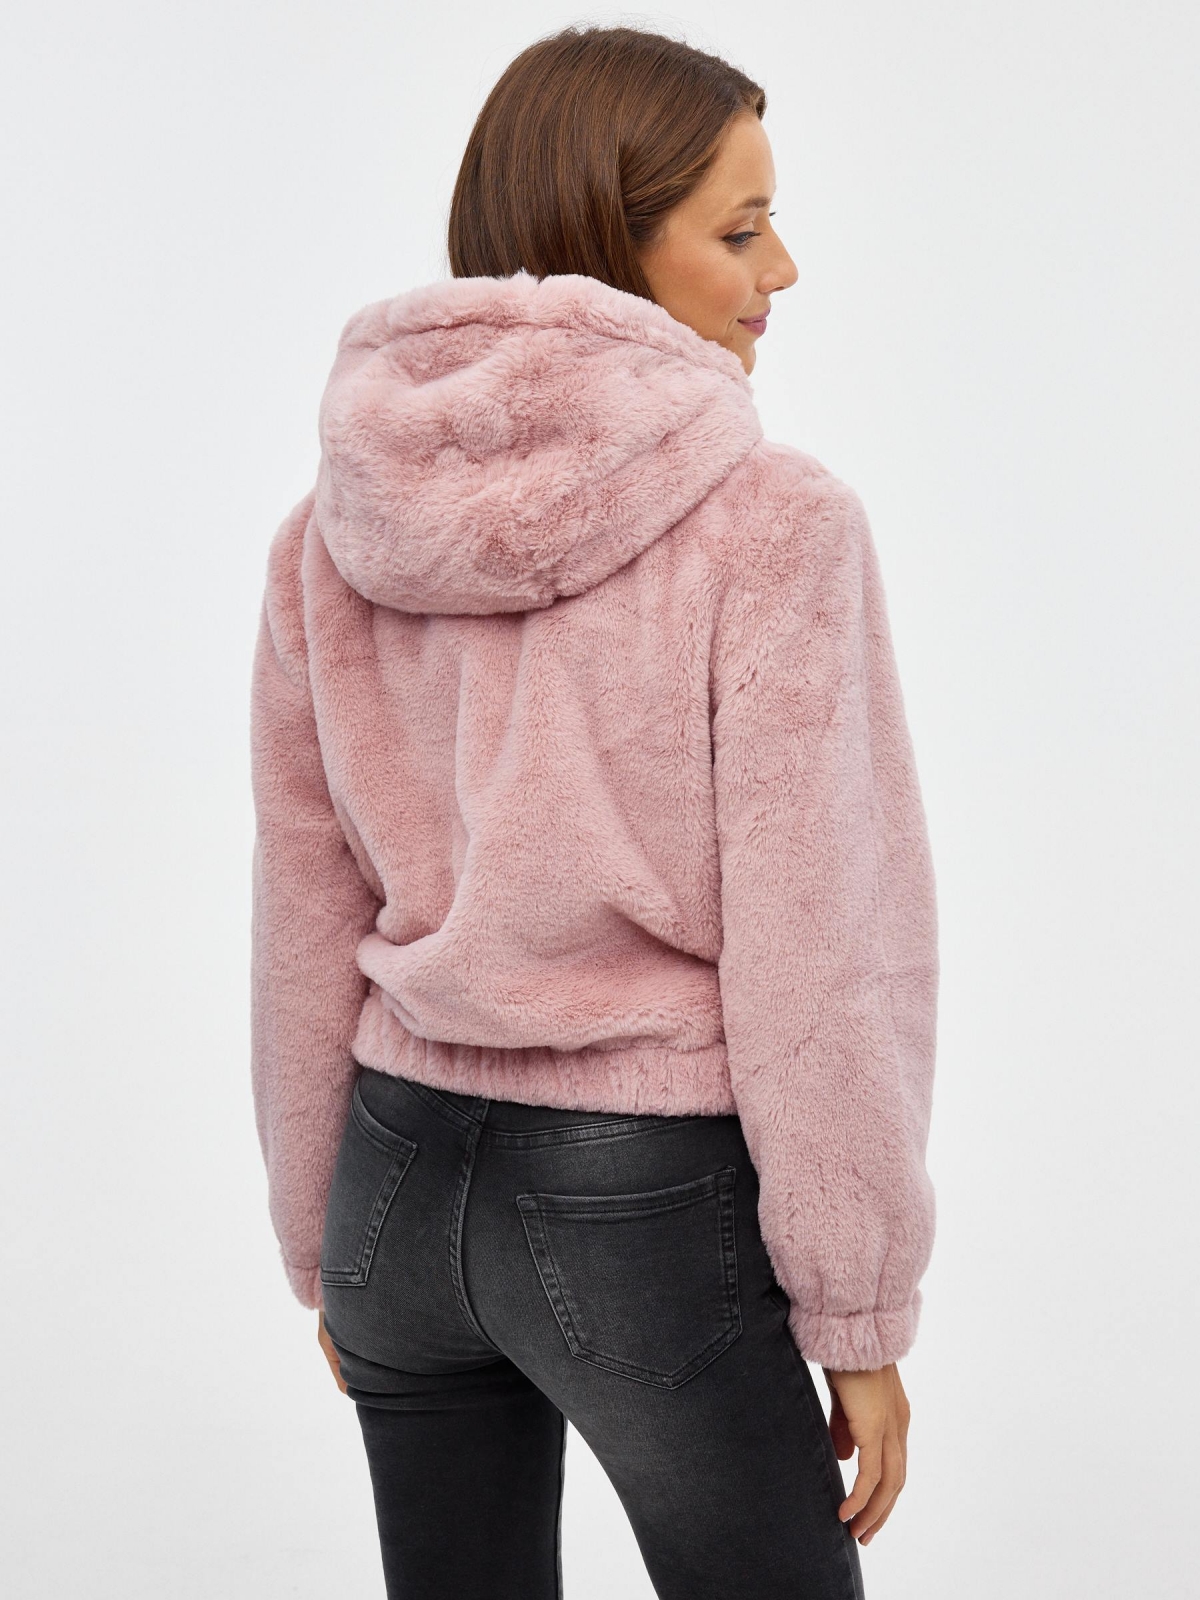 Pink fur effect jacket pink middle back view